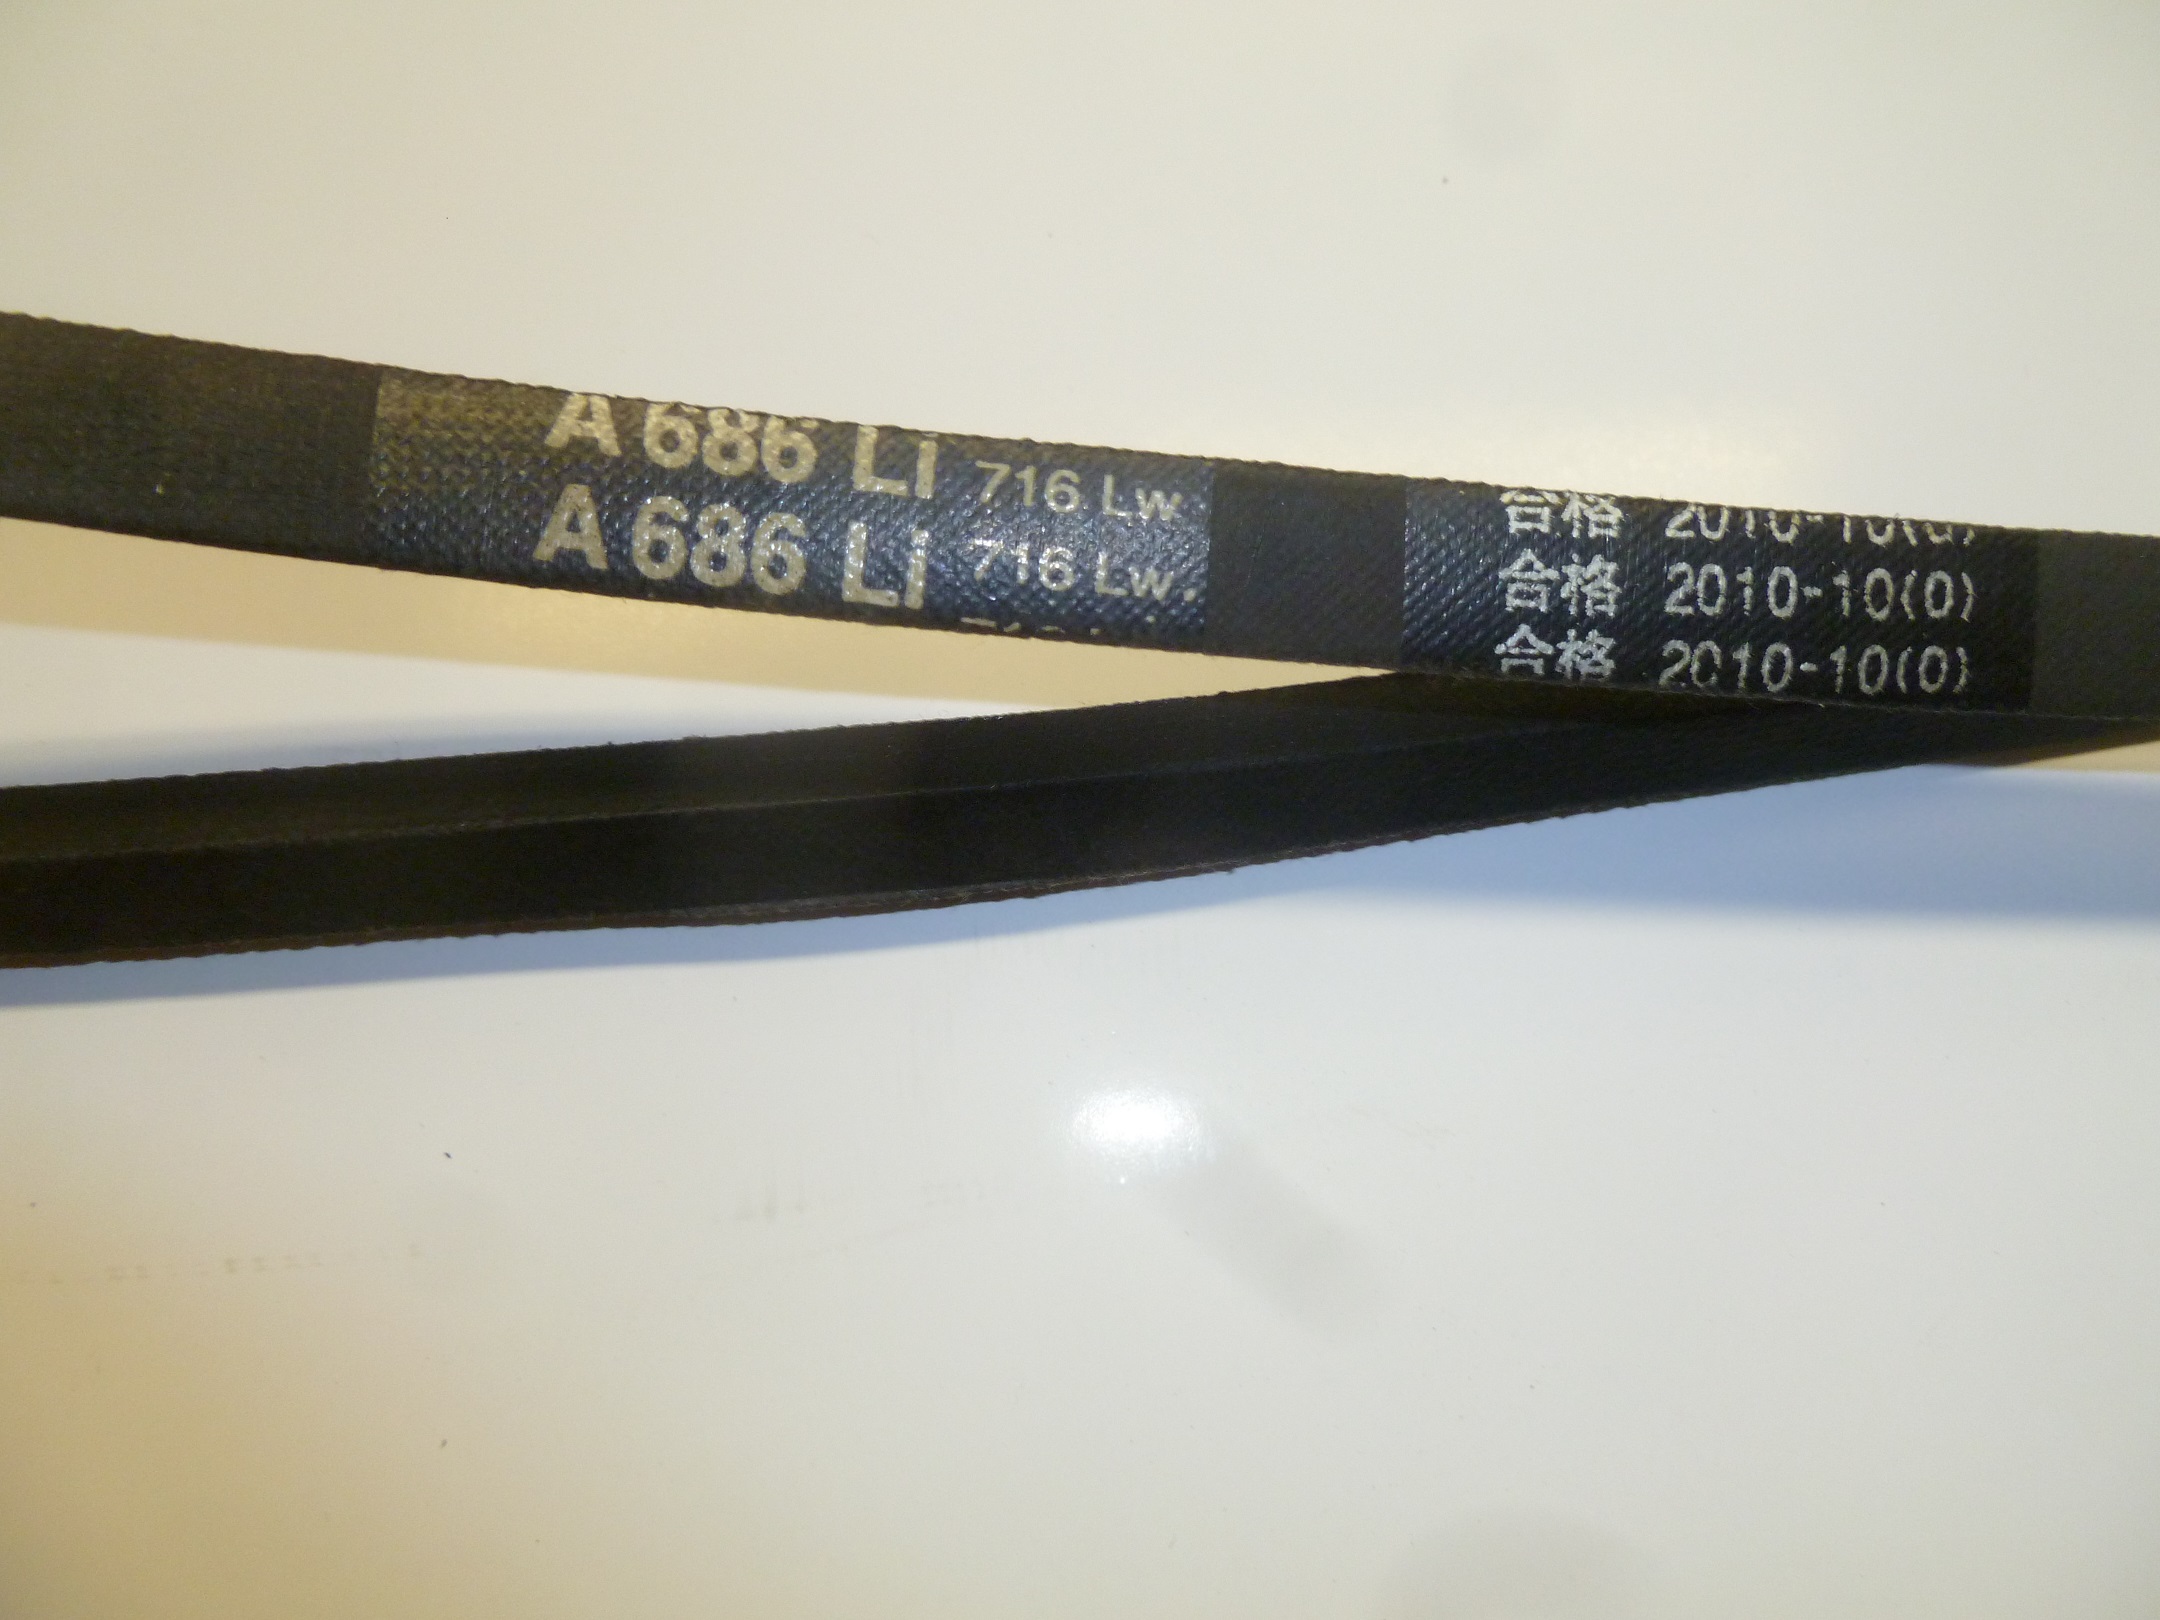 Ремень приводной гладкий (А686Li 716Lw) для TSS-VP50/WP50L/V-Belt